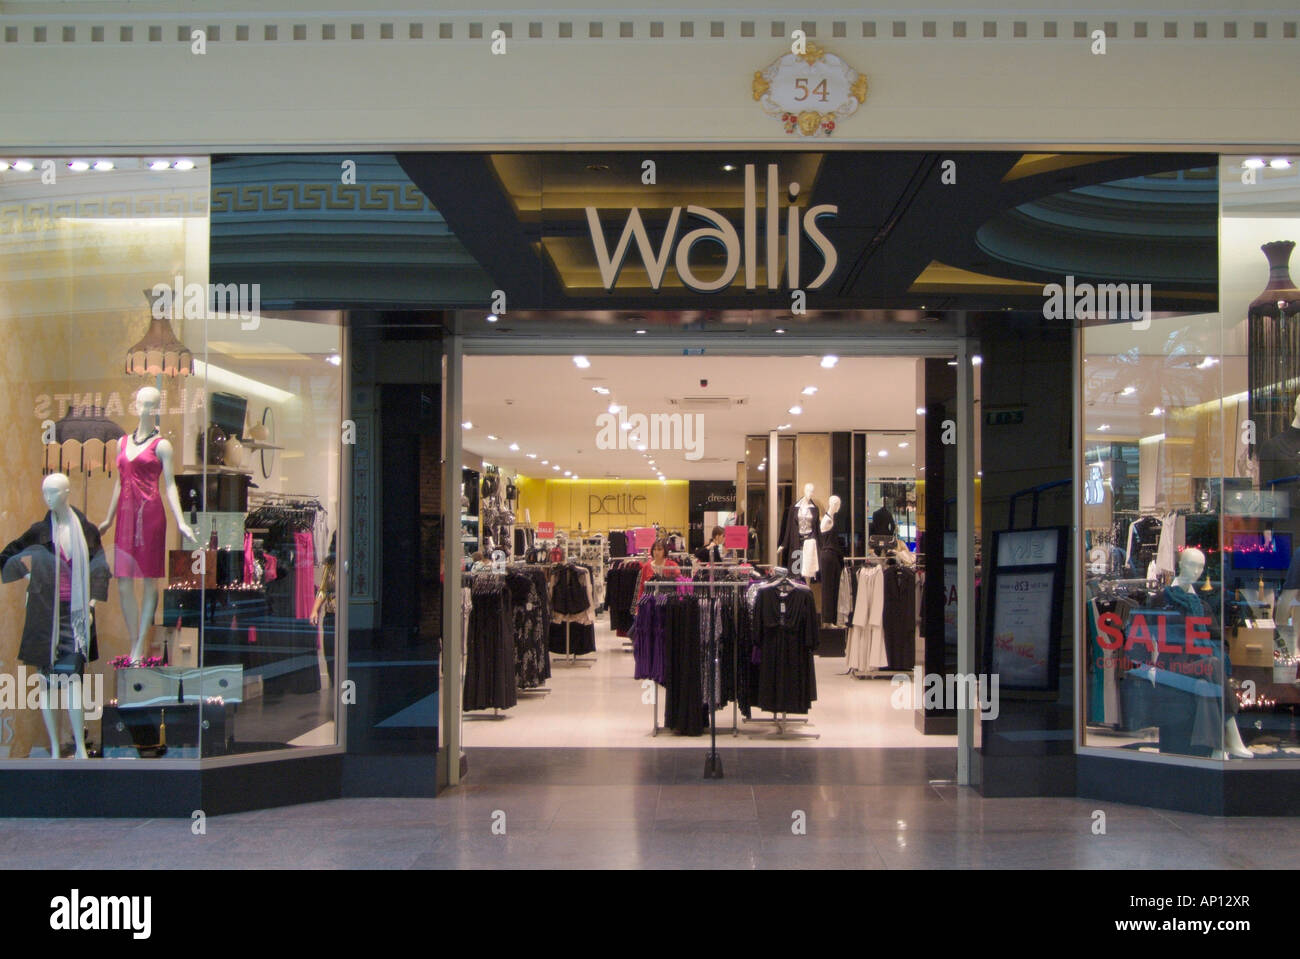 Wallis shop hi-res stock photography and images - Alamy